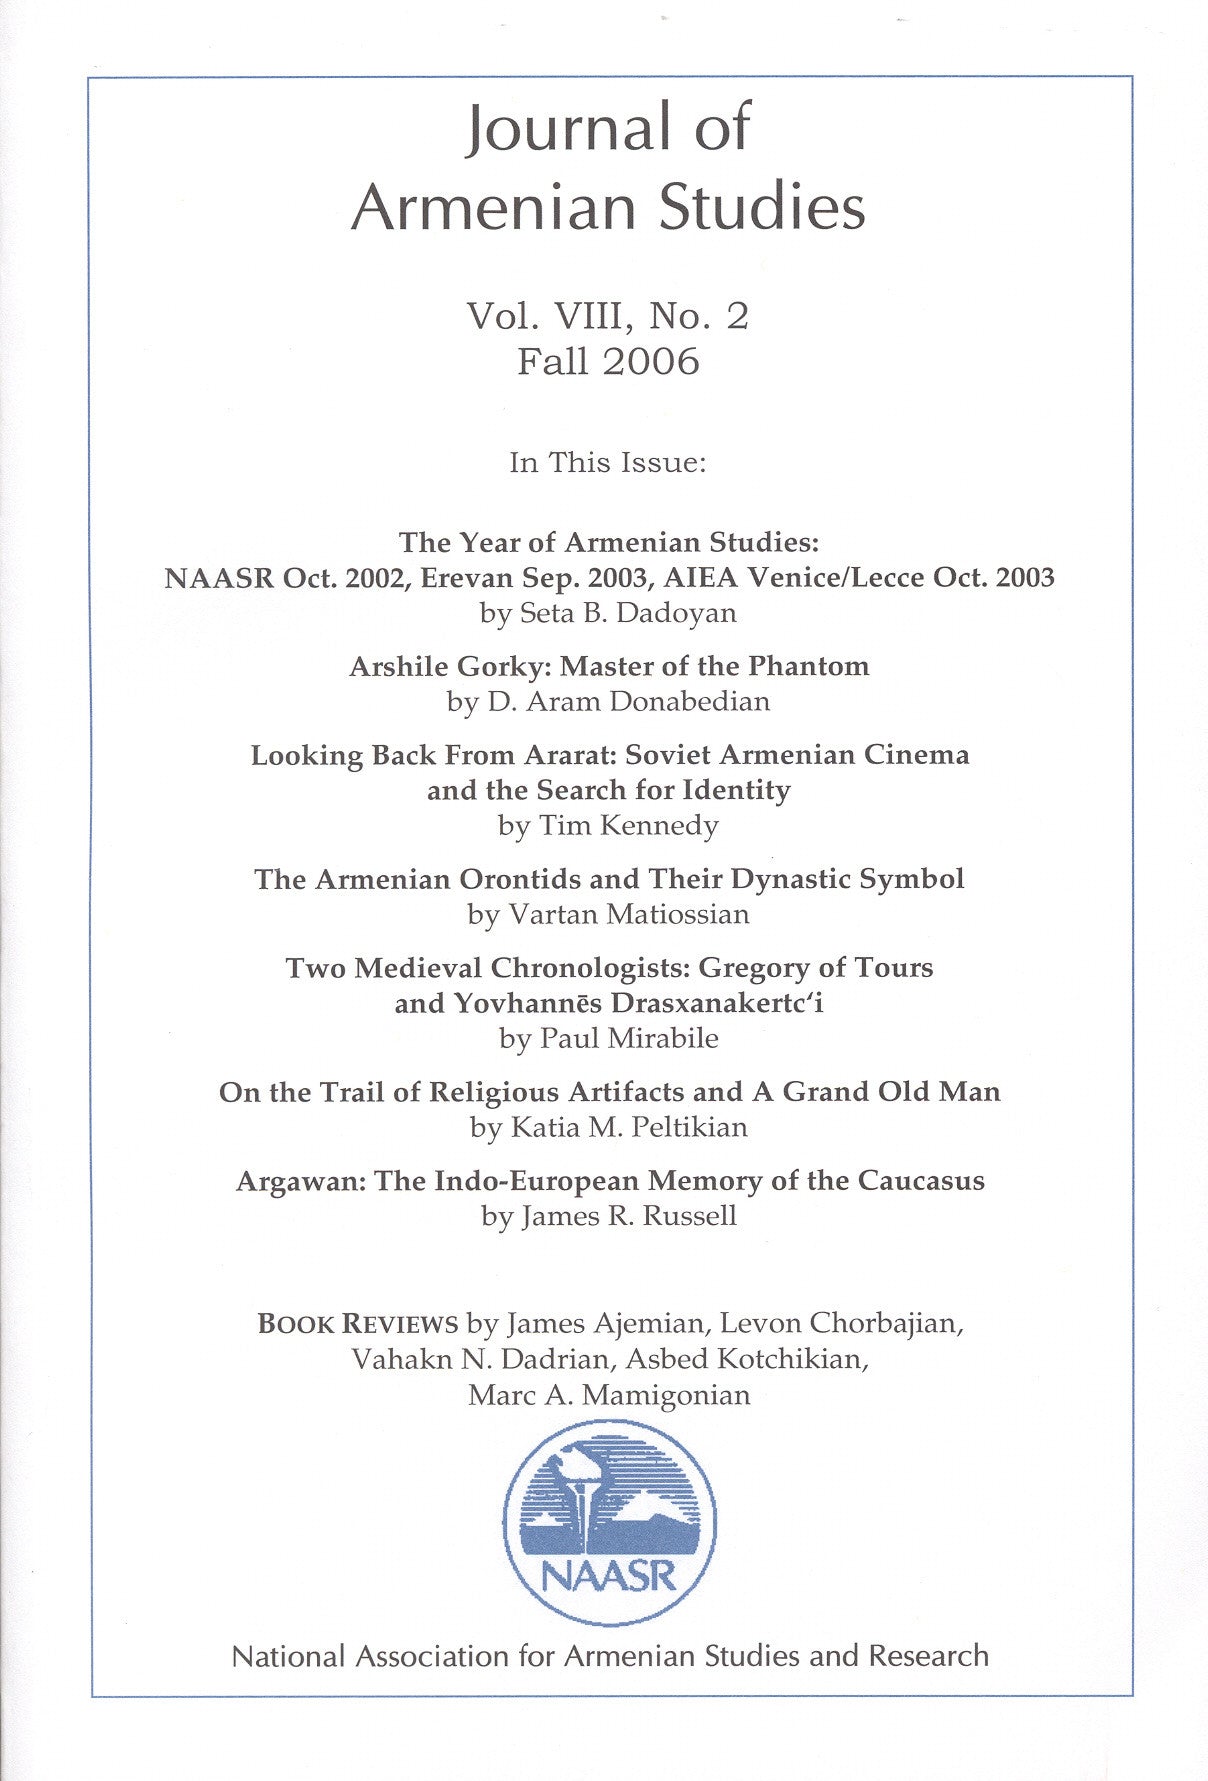 JOURNAL OF ARMENIAN STUDIES: Volume VIII, Number 2: Fall 2006